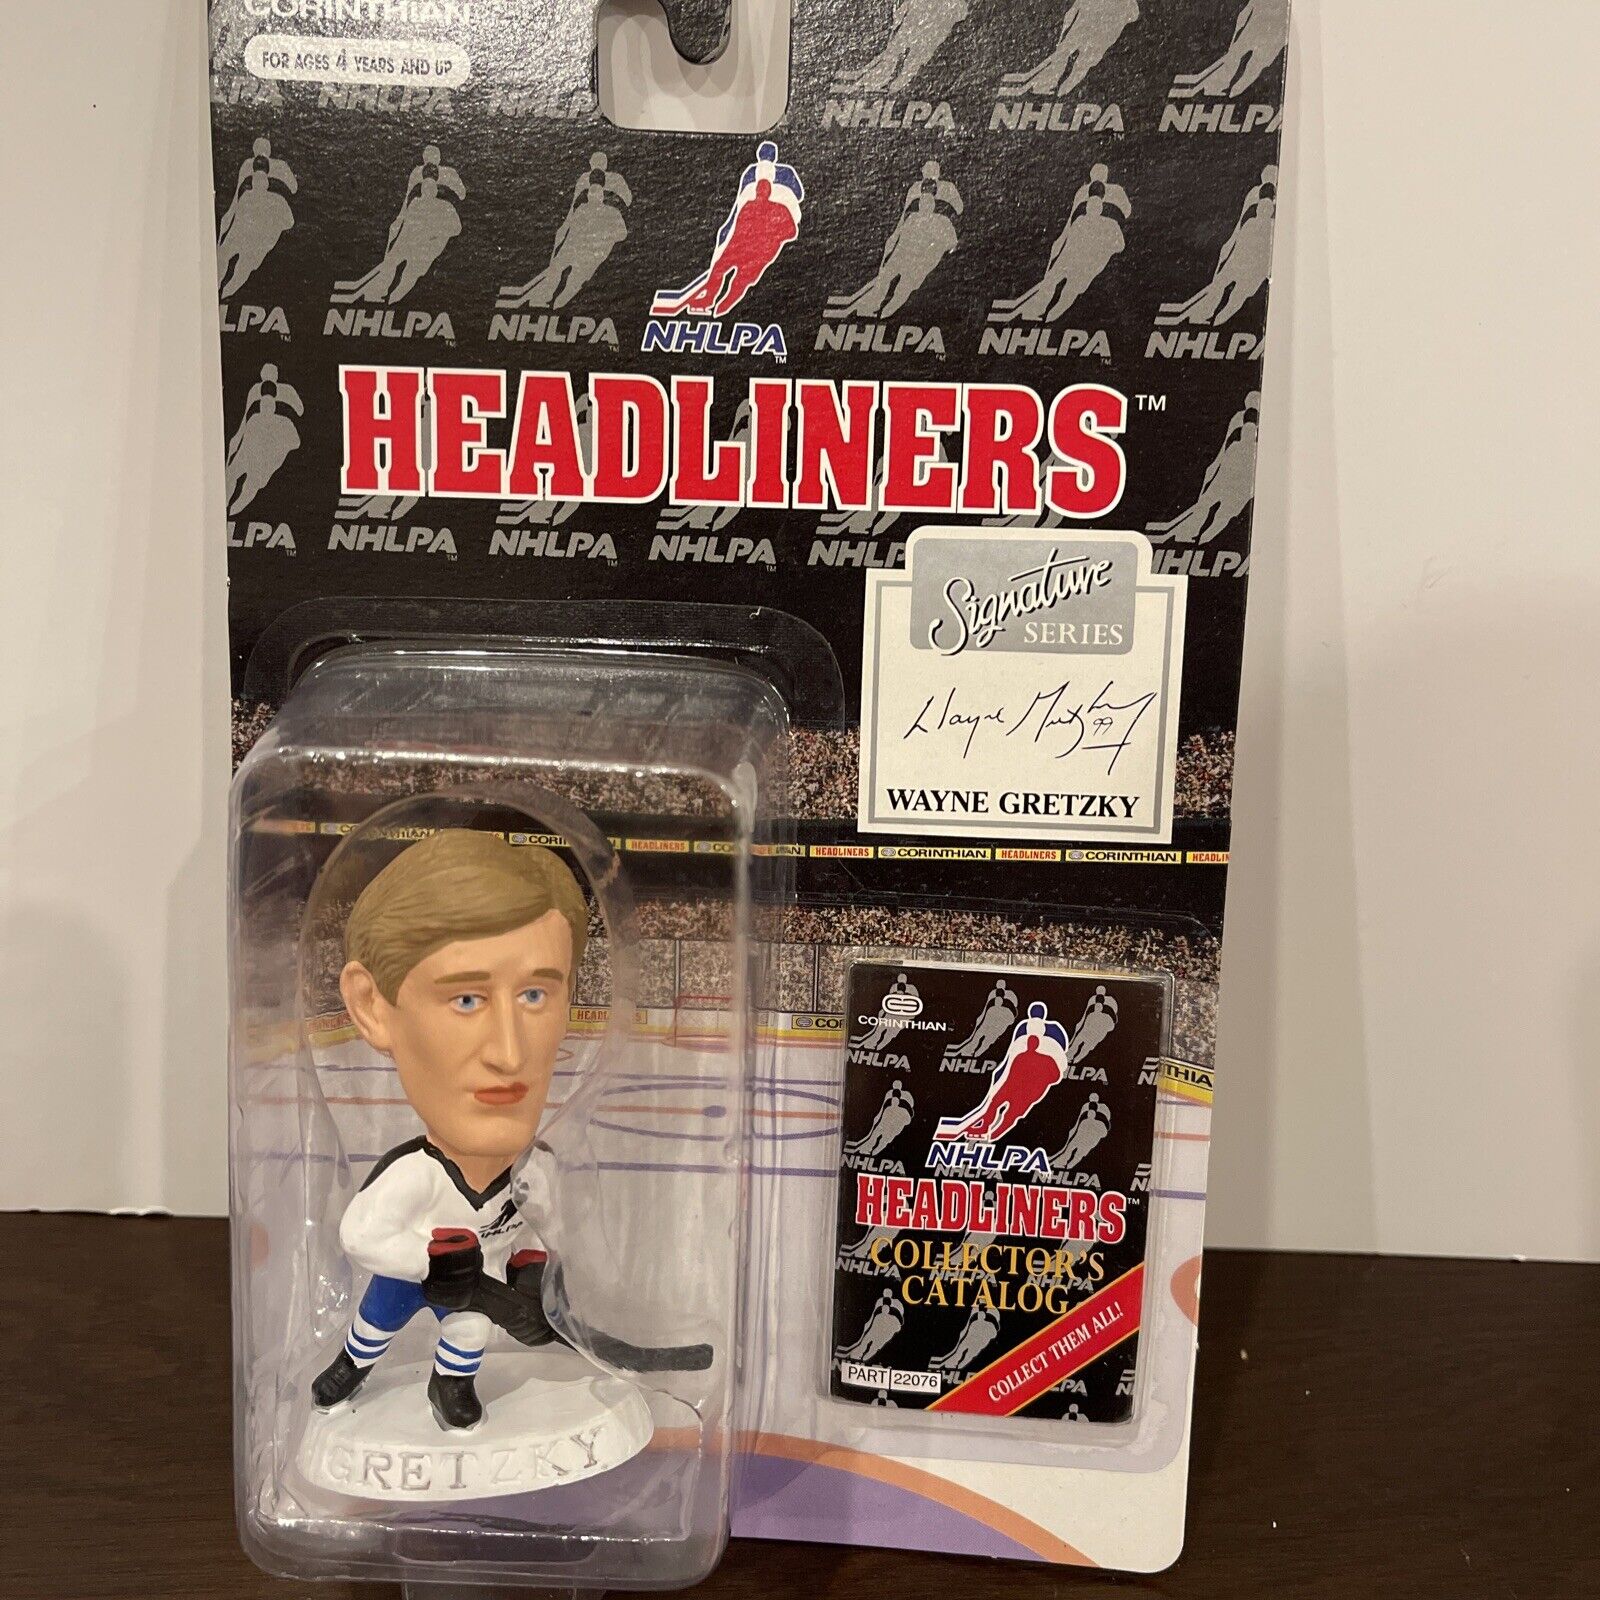 WAYNE GRETZKY SIGNATURE SERIES 1996 CORINTHIAN HEADLINERS NHLPA FIGURE NIP